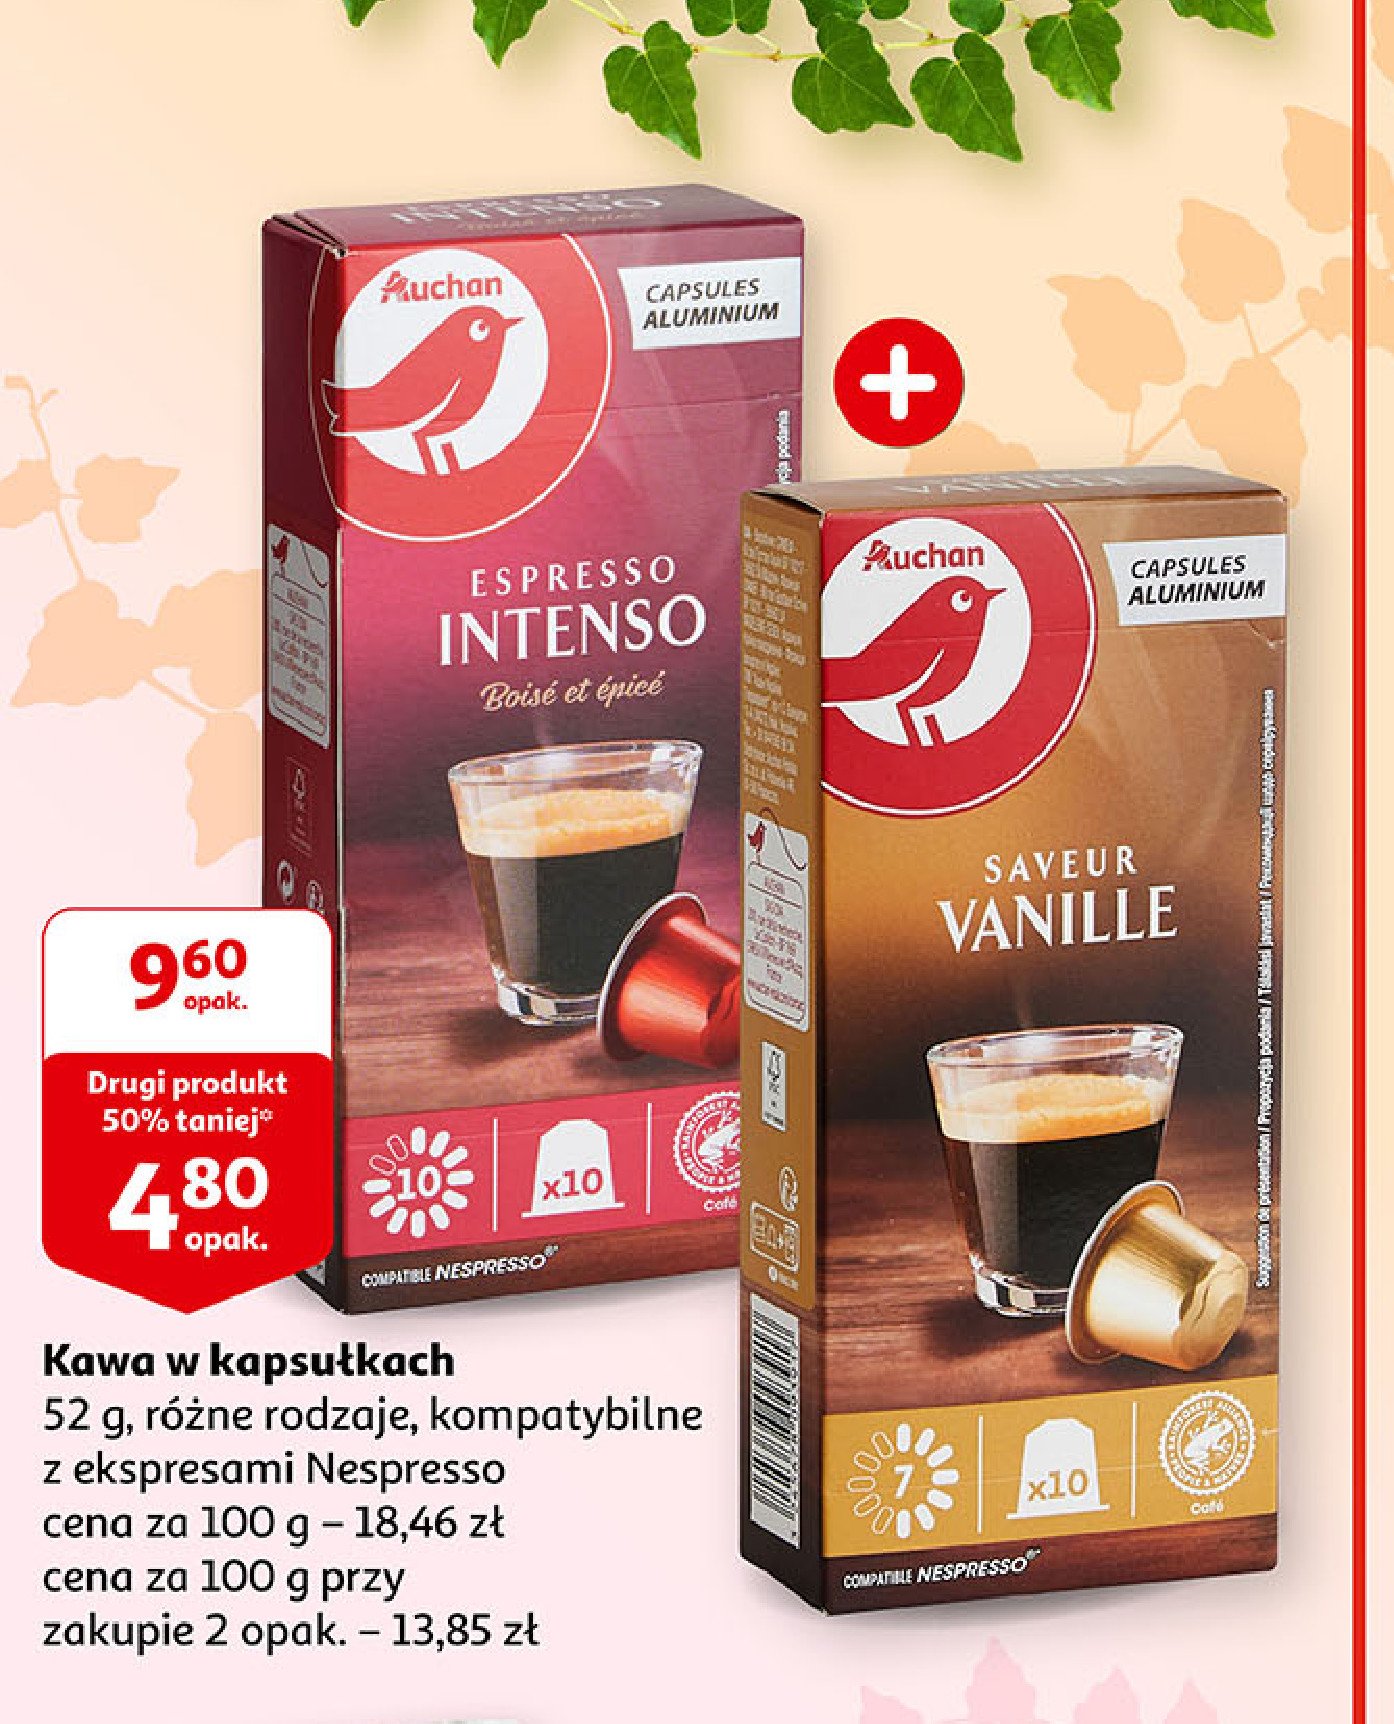 Kawa vanille Auchan różnorodne (logo czerwone) promocja